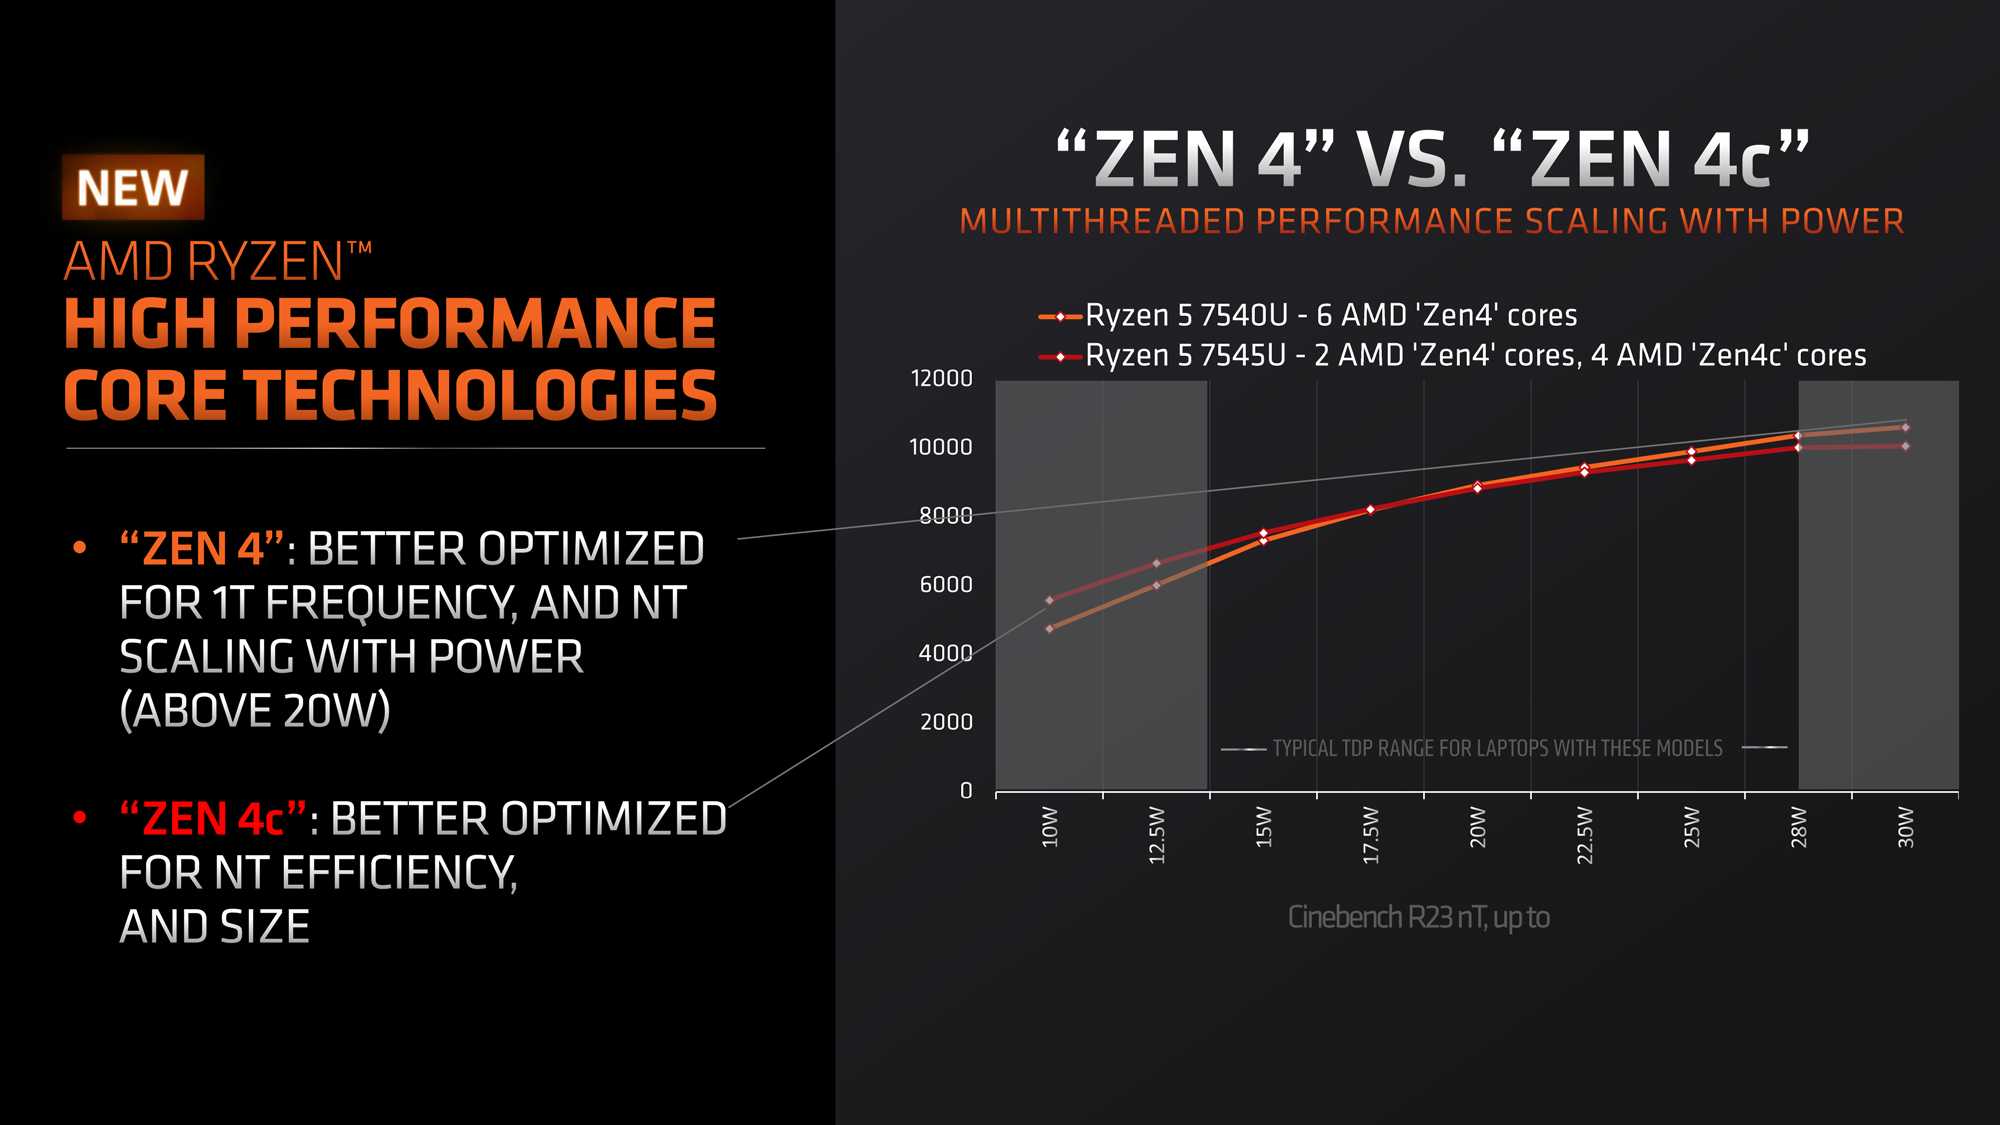 AMD-RYZEN-7040U-Zen4c-SMALL-PHOENIX_large.jpg